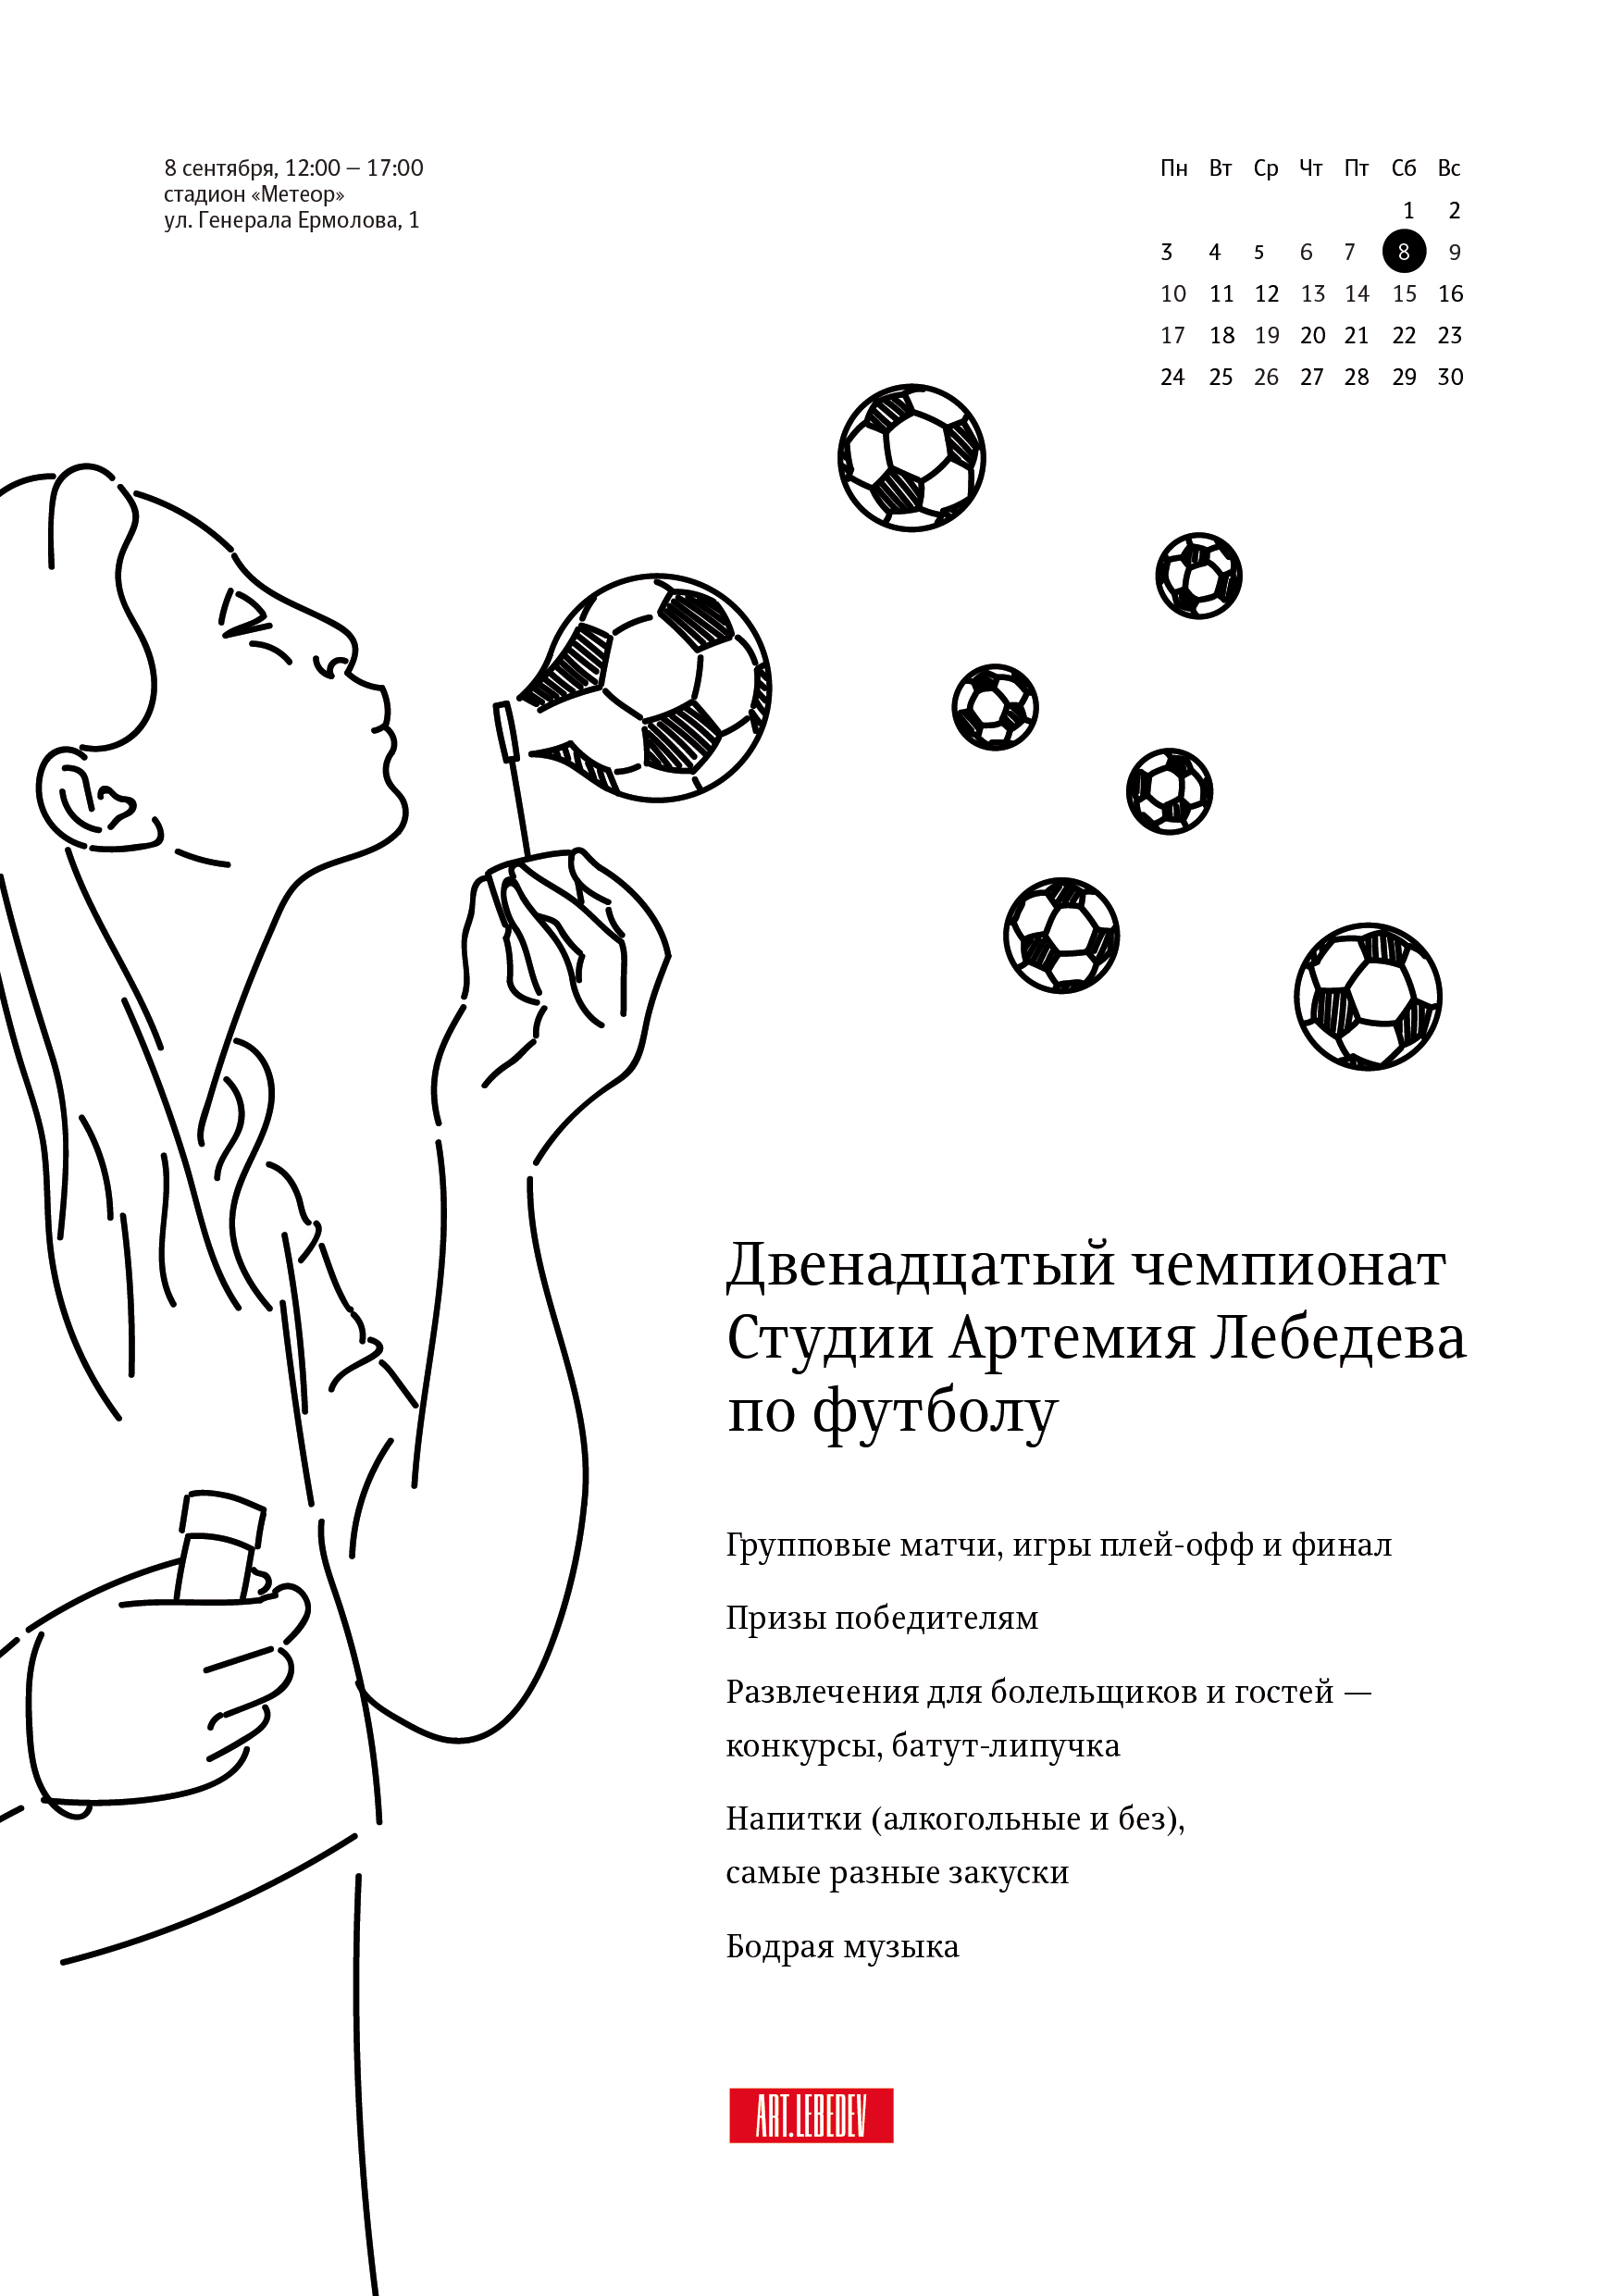 football poster 2018 01